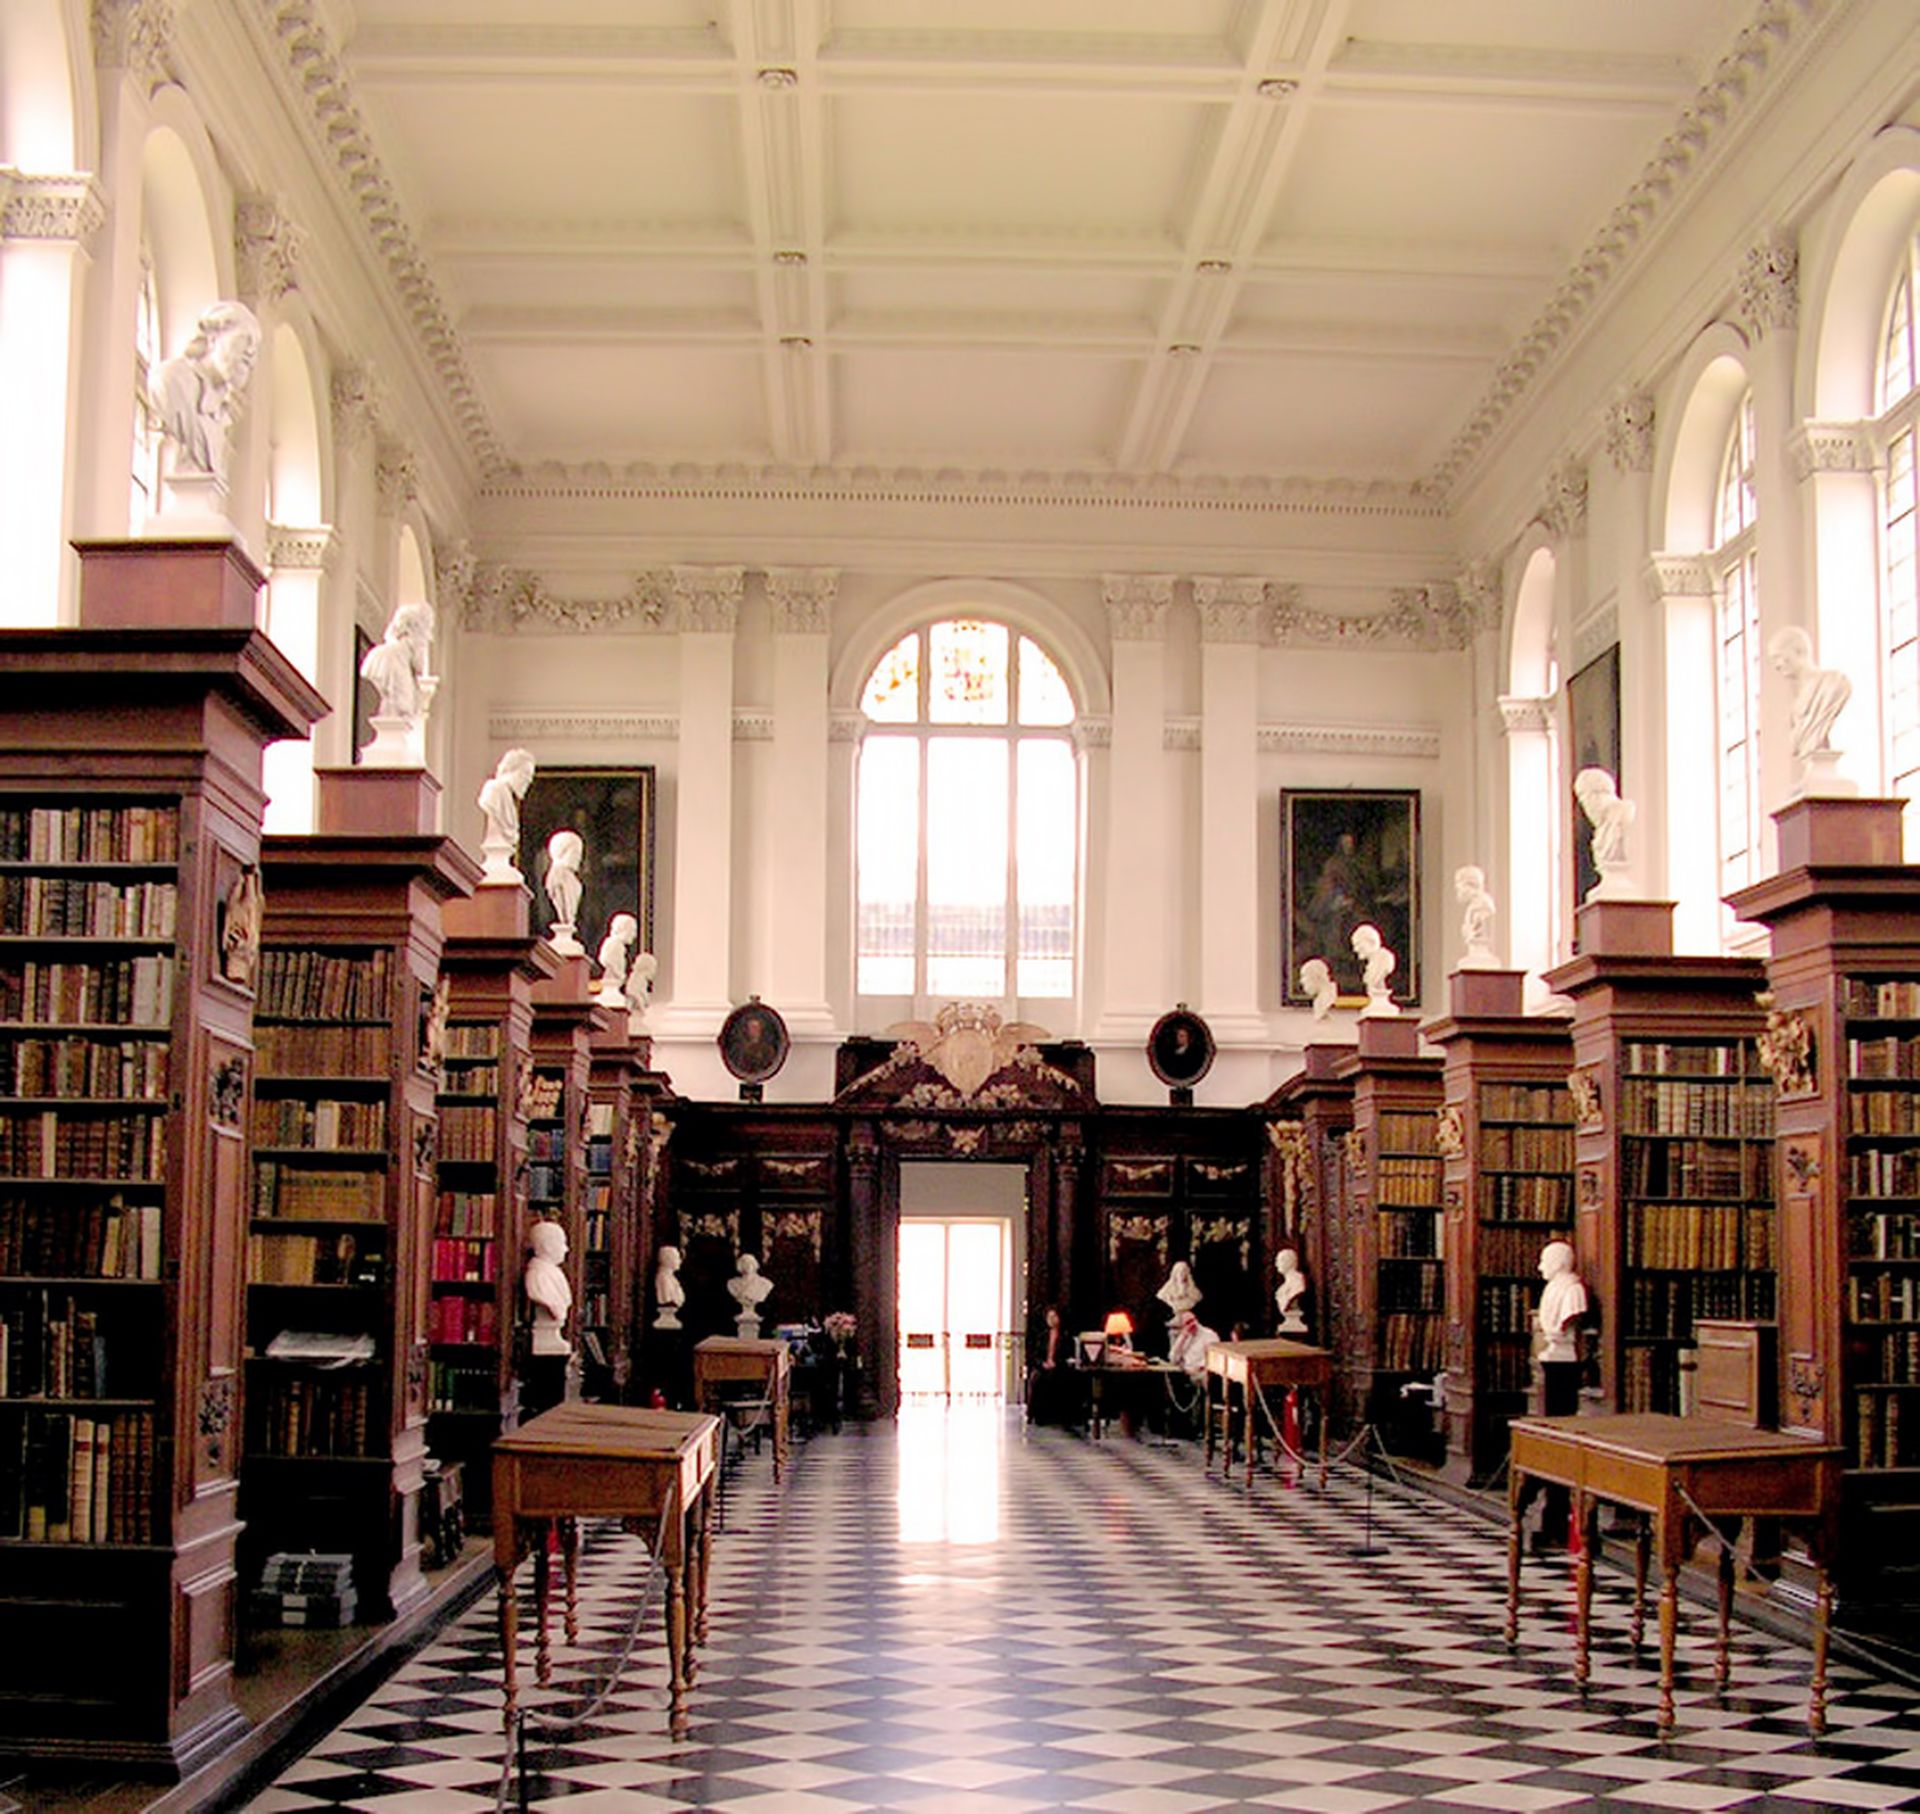 Page library. Библиотека Тринити-колледжа в Кембридже. 2. Библиотека Тринити-колледжа в Кембридже. Кембридж университет библиотека. Эстетика 19 века Англия библиотека.